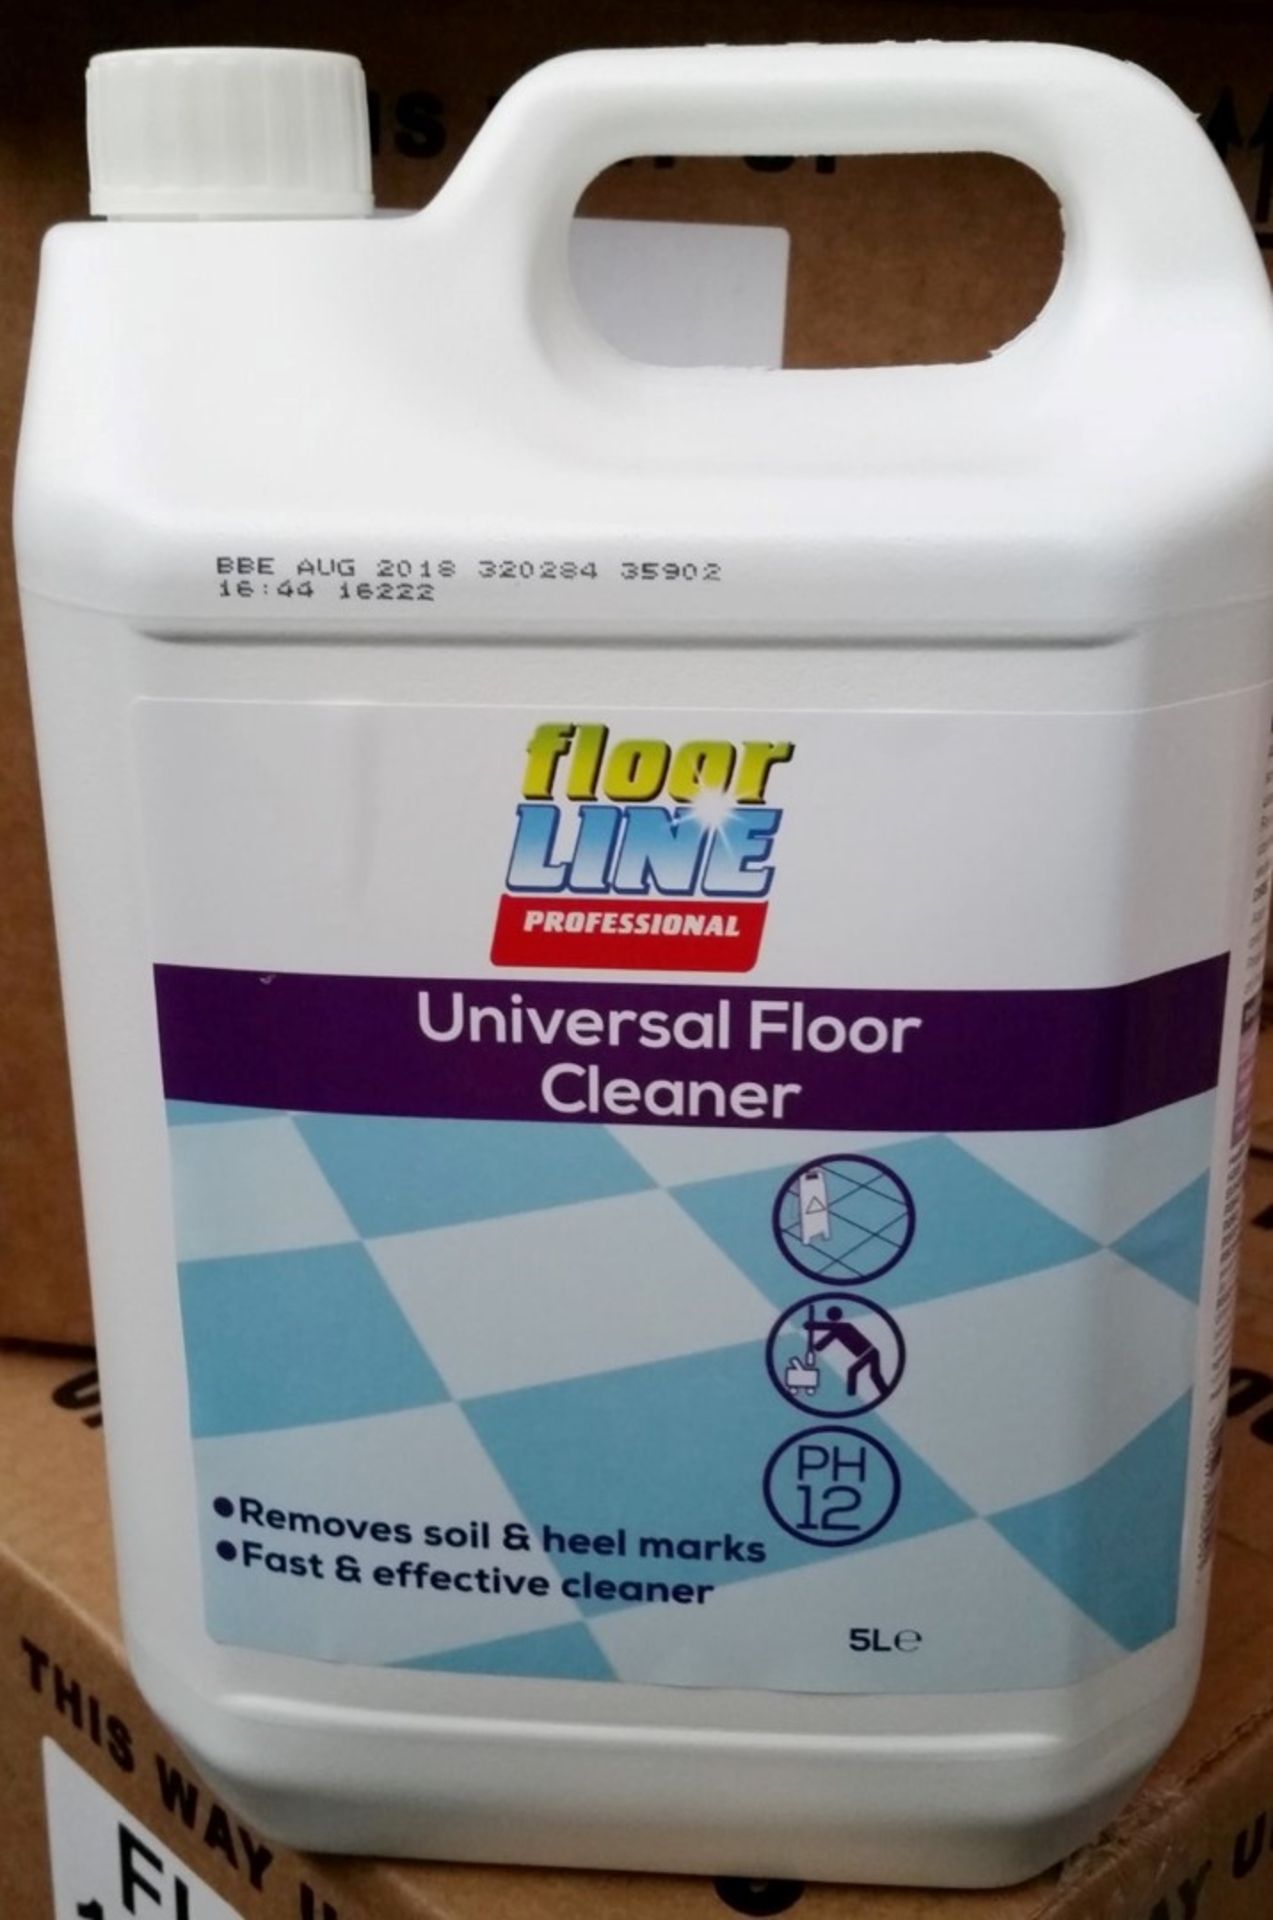 2 x Floor Line Professional 5 Litre Universal Floor Cleaner - Removes Soil & Heel Marks - Fast &